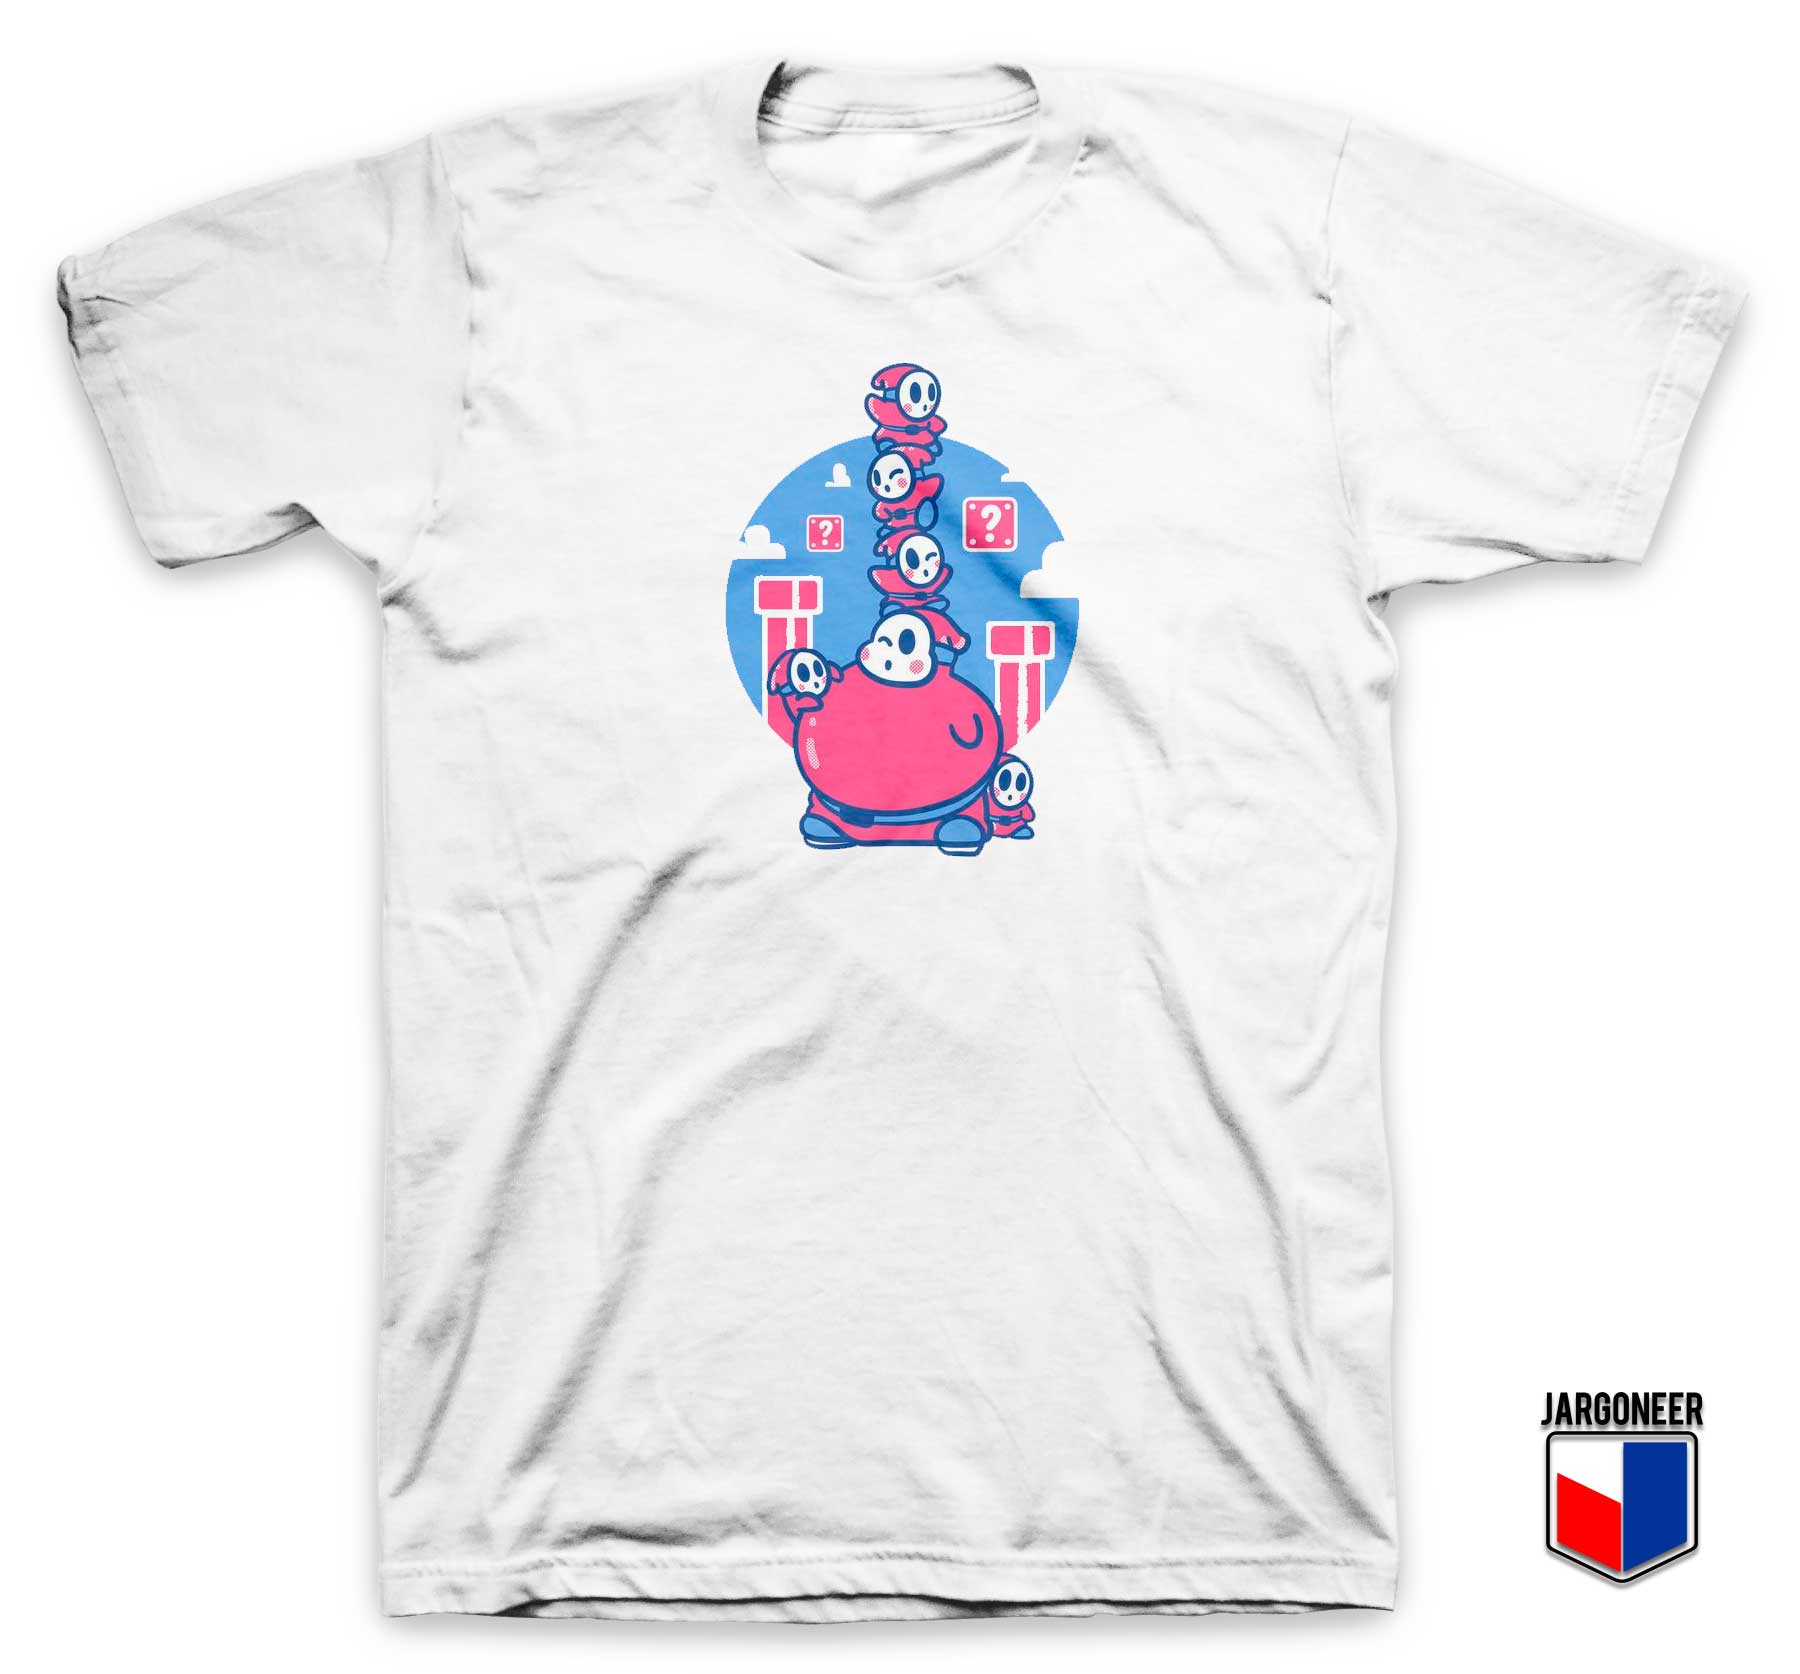 Shy Guys Tower Up T Shirt - Shop Unique Graphic Cool Shirt Designs